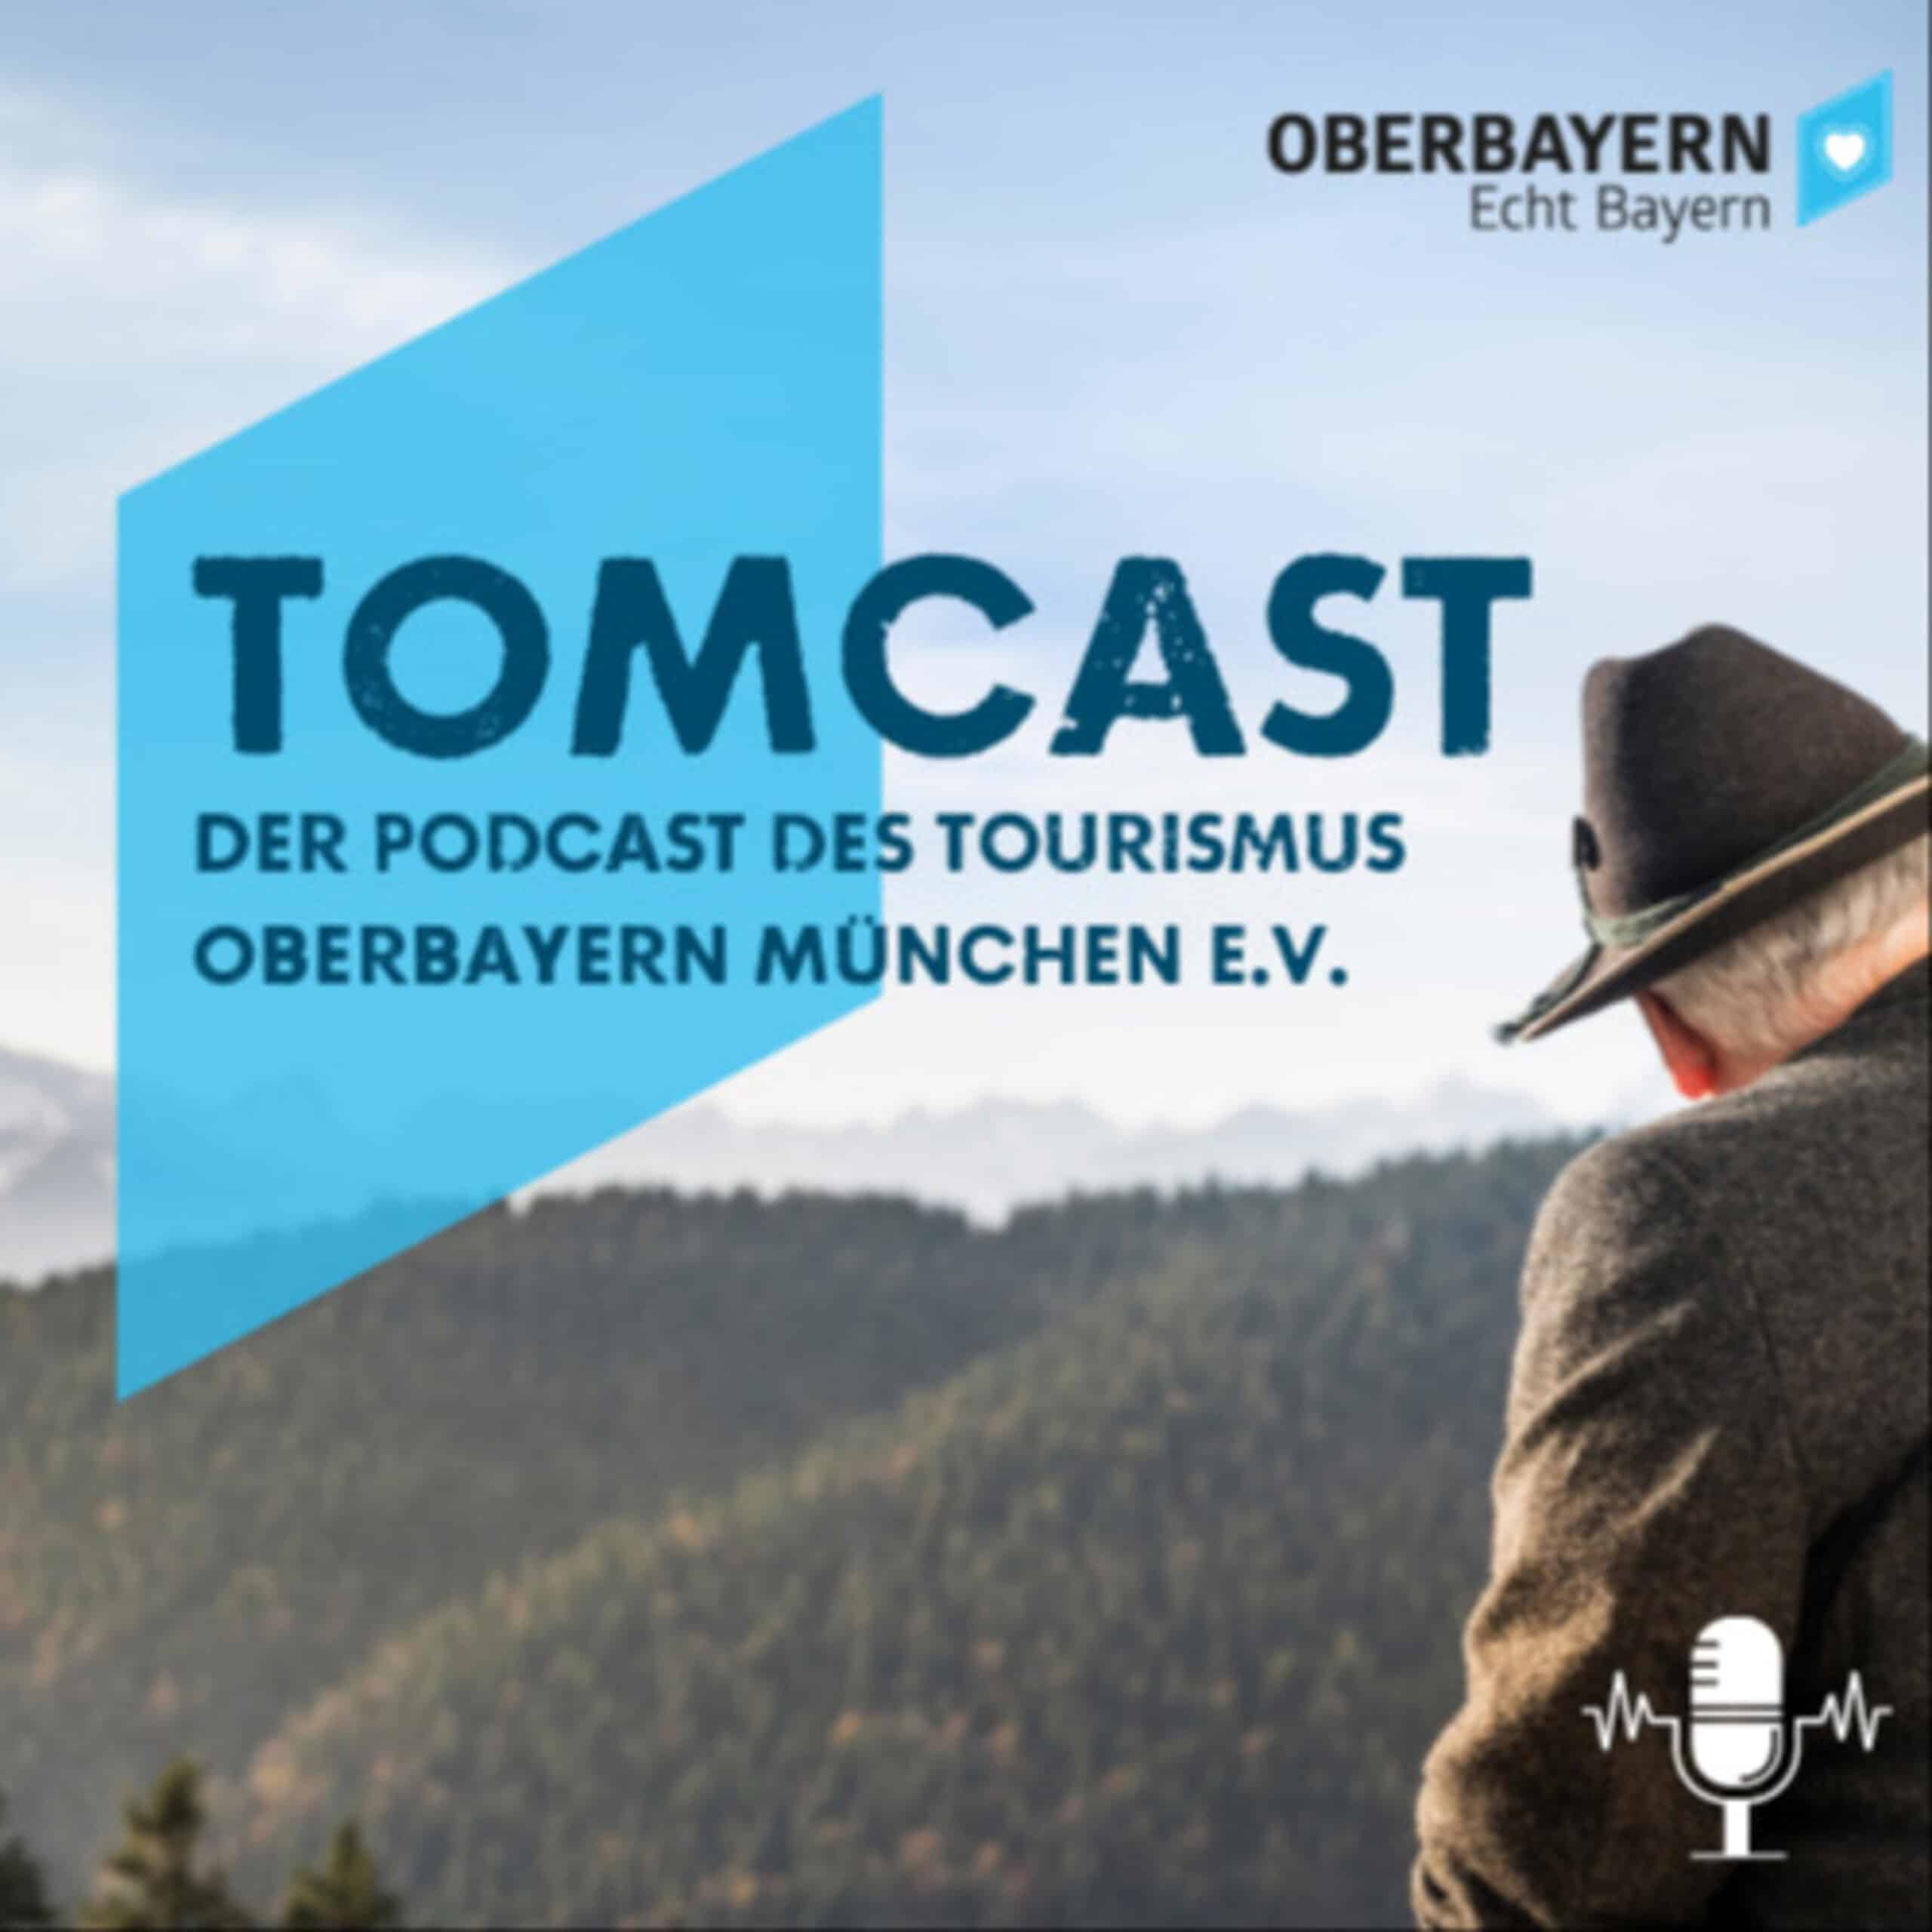 tomcast oberbayern podcast tourismus